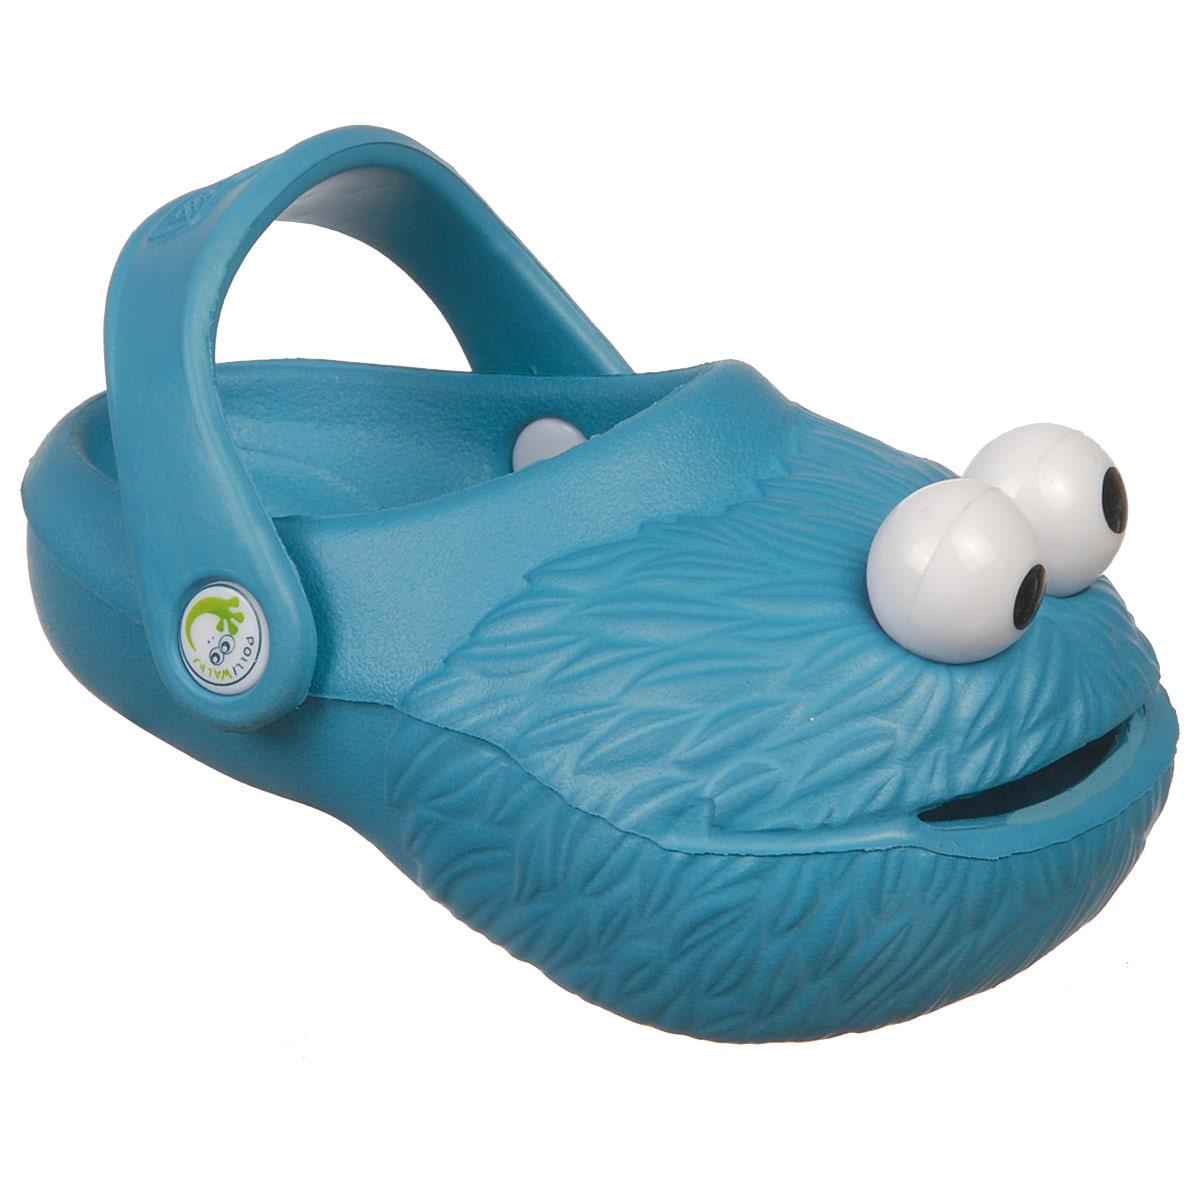 Polliwalks : Toddler shoes COOKIE MONSTER Blue # 7